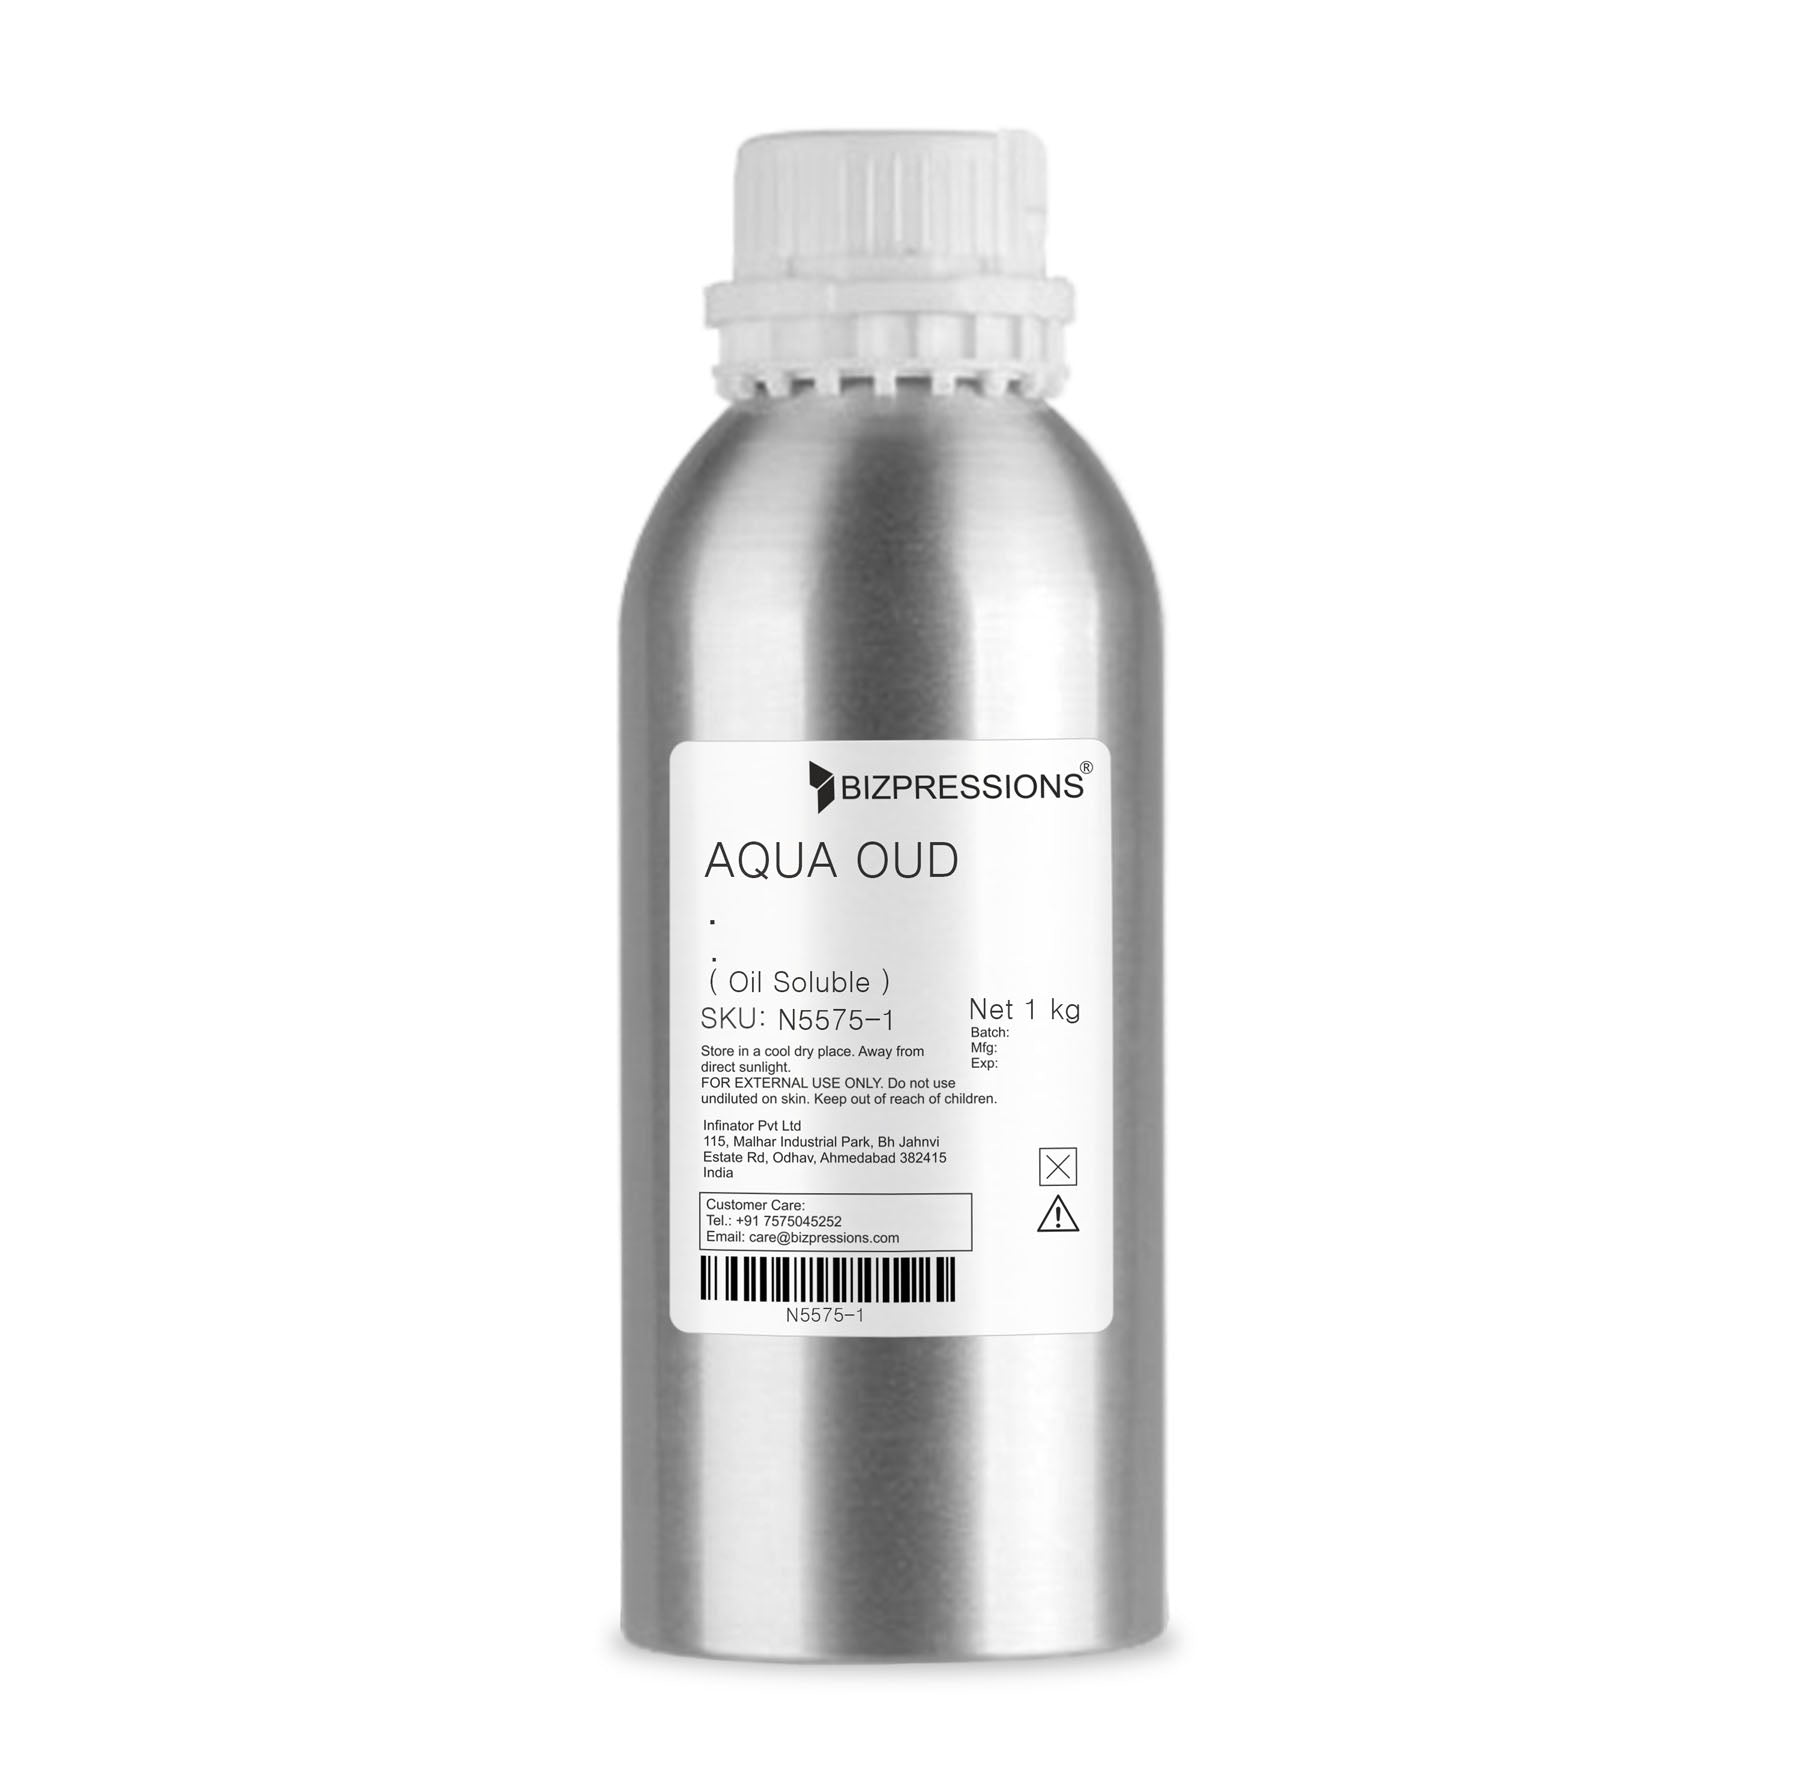 AQUA OUD - Fragrance ( Oil Soluble ) - 1 kg